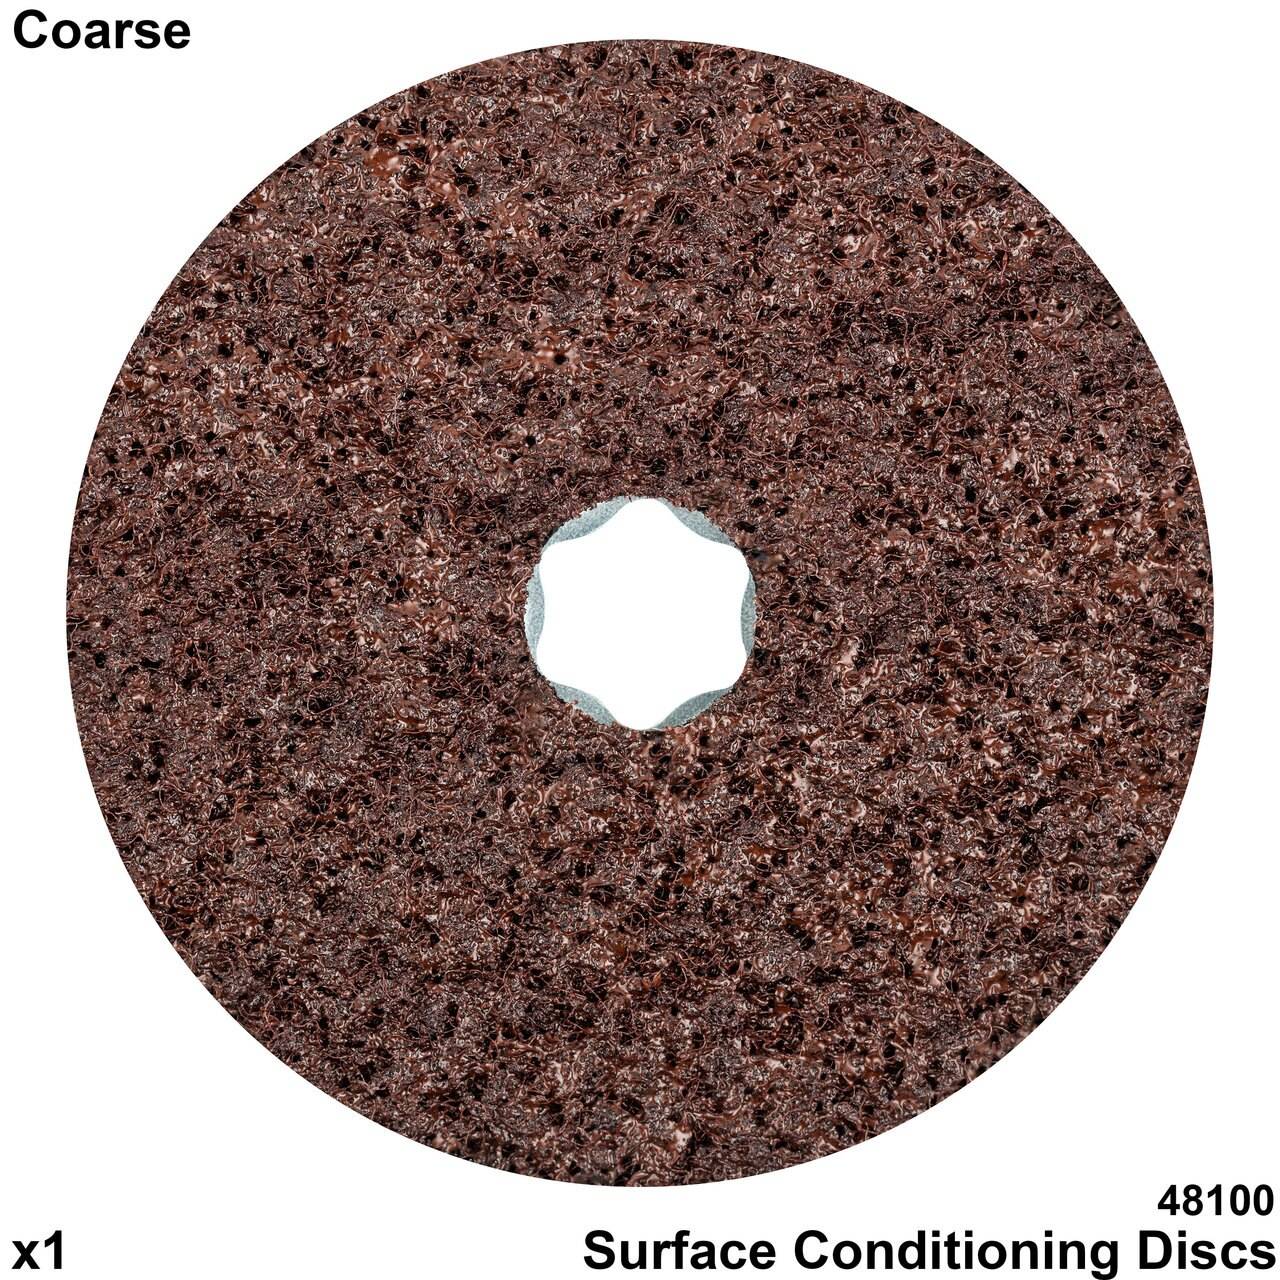 Ceramic Oxide Co-Cool PFERD 40729 Combiclick Fibre Disc 13300 RPM Pack of 25 80 Grit 4-1/2 Diameter 4-1/2 Diameter PFERD Inc. 